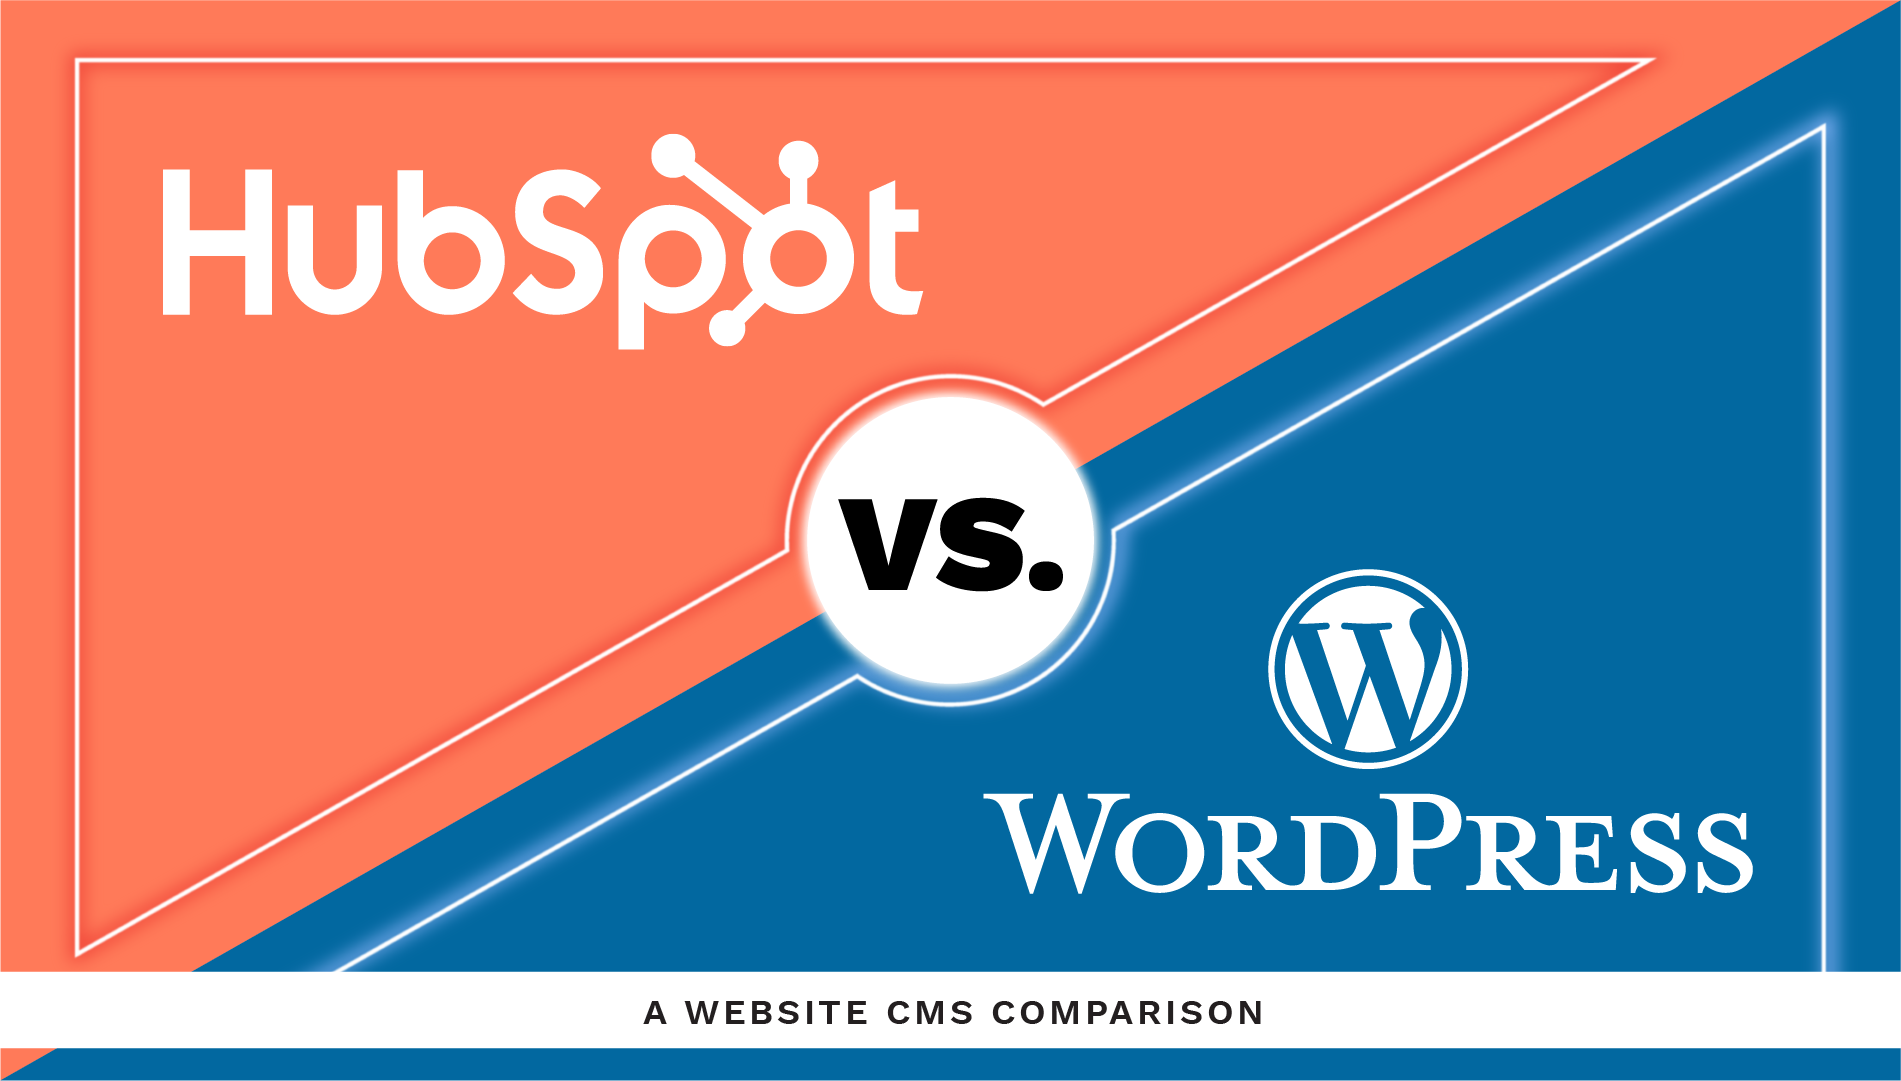 HubSpot vs. WordPress - A Website CMS Comparison